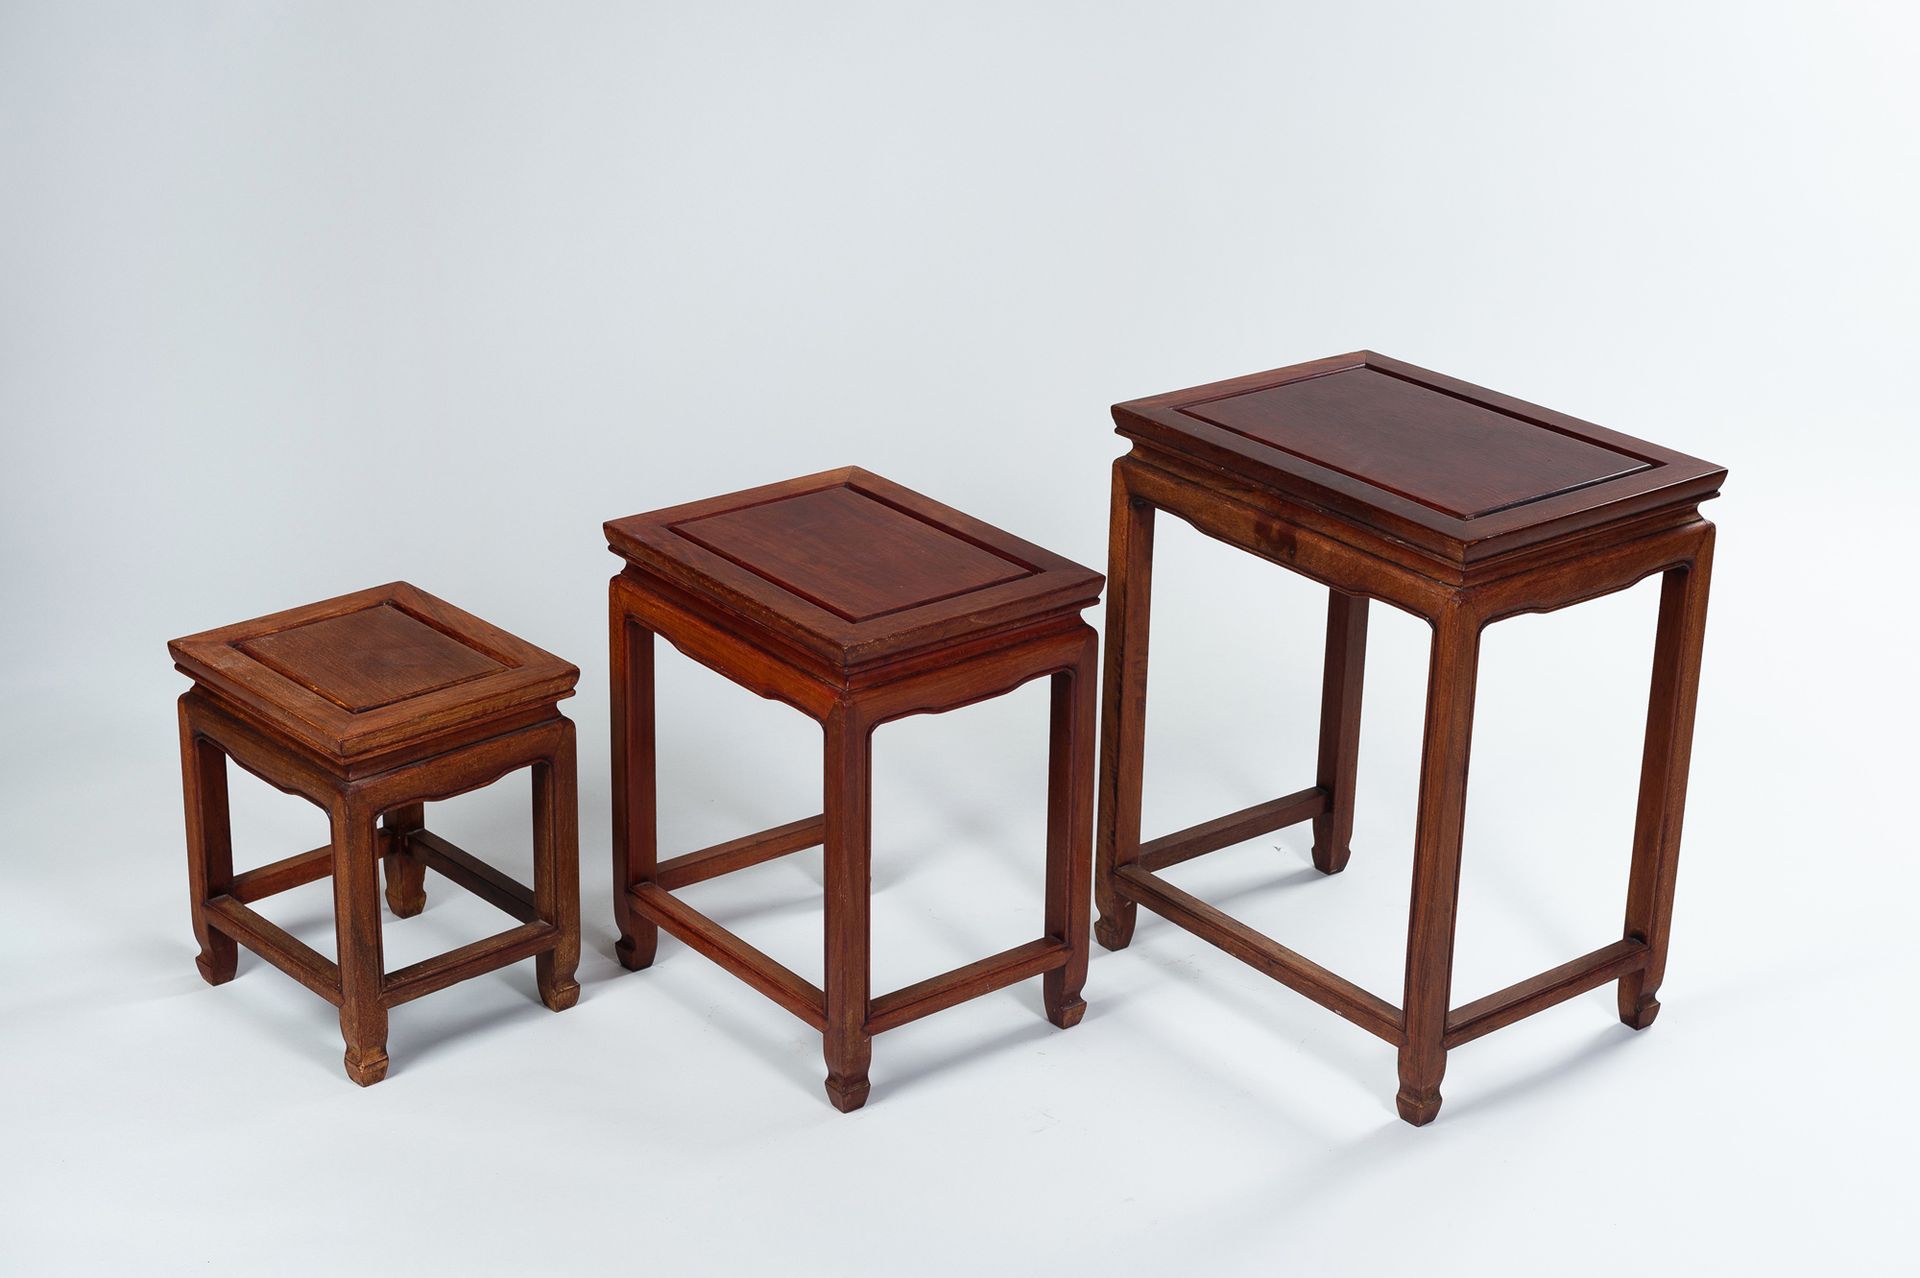 A FINE SET OF THREE REDDISH WOOD SIDE TABLES 一套精美的红木边桌
中国，19世纪末。每张桌子都是长方形的，由四条直腿&hellip;